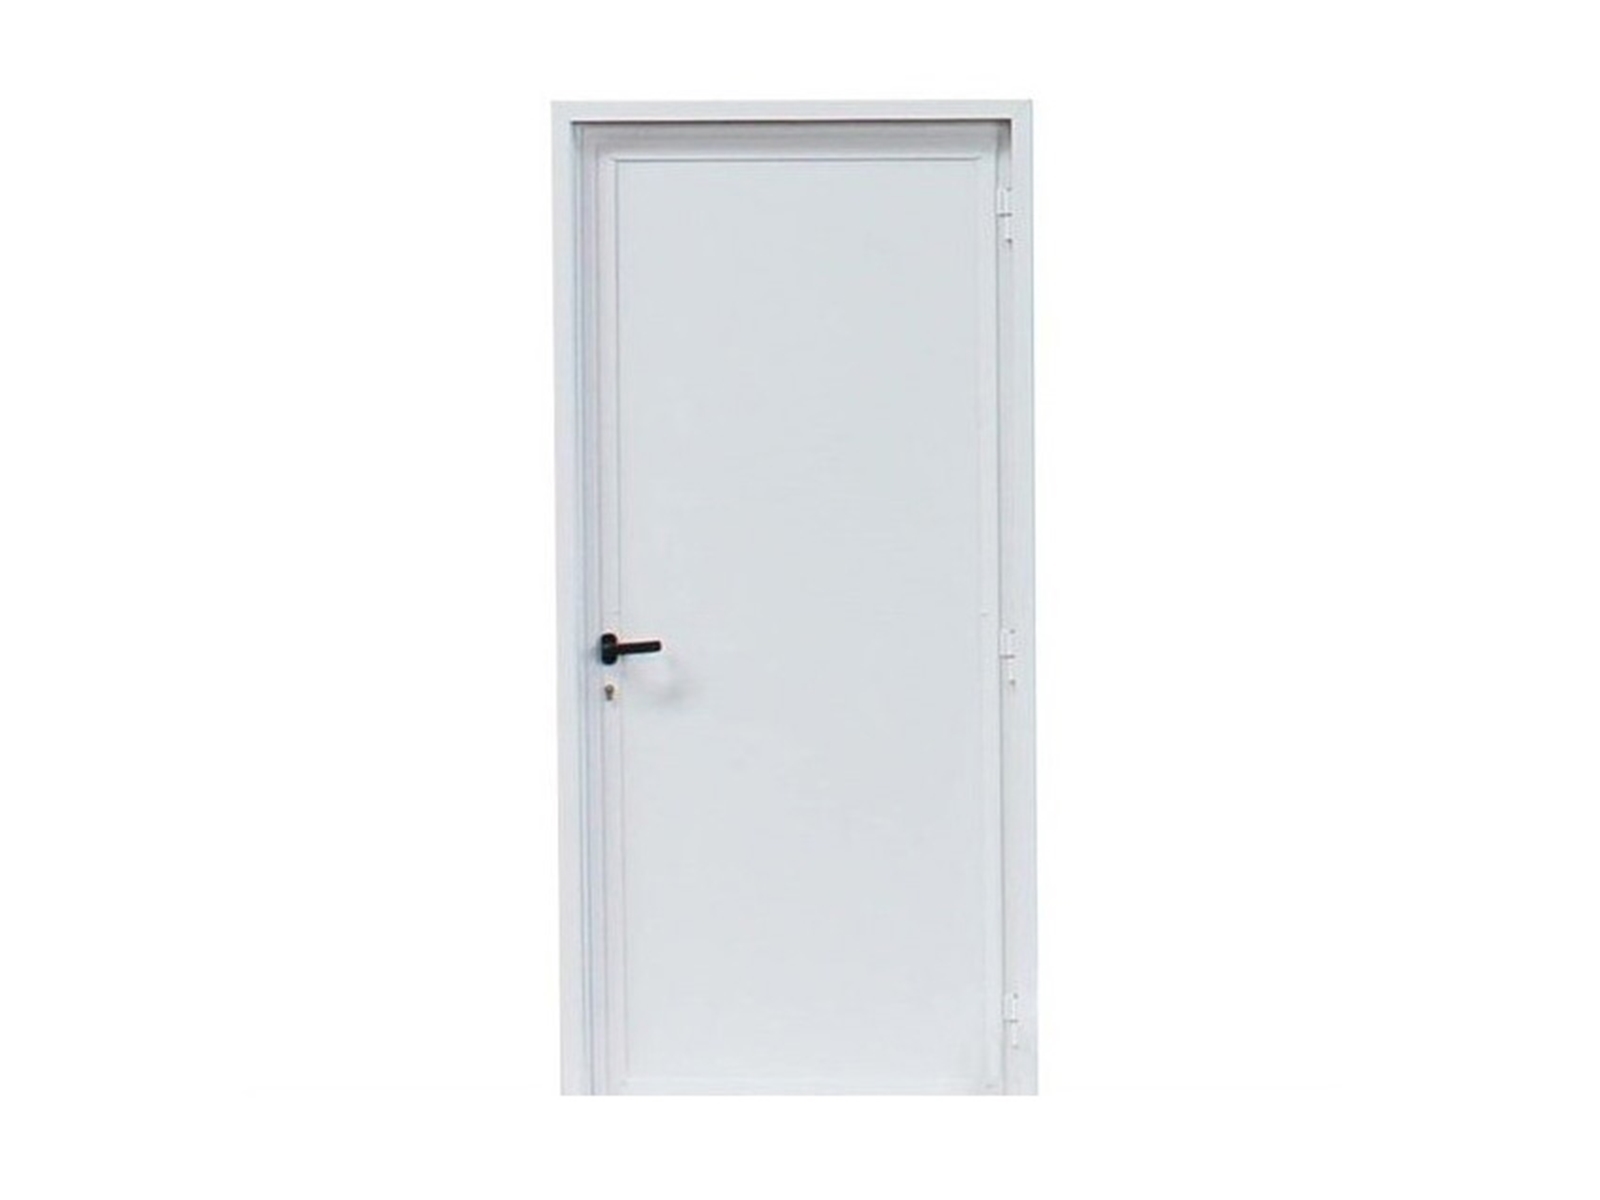 Aluminium loopdeur met kozijn, kleur wit